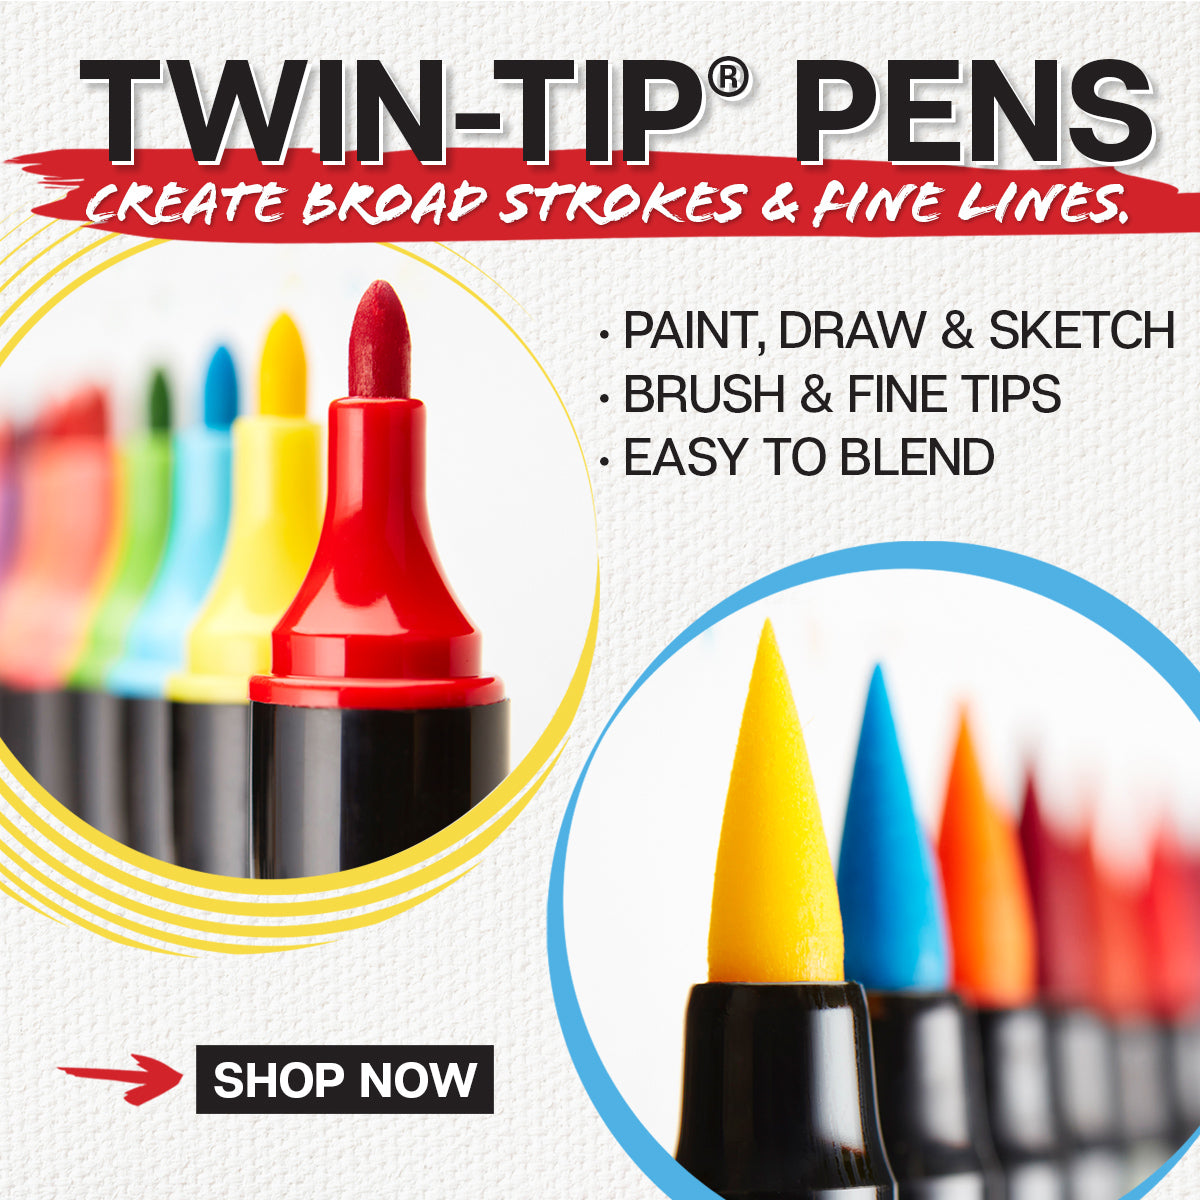 48/36/24/18/12/6 Colors Gel Pens Set Highlighter Marker Pen Watercolor Pen  Glitter Gel Pen for Adult Coloring Books Journals Drawing Doodling Art  Markers